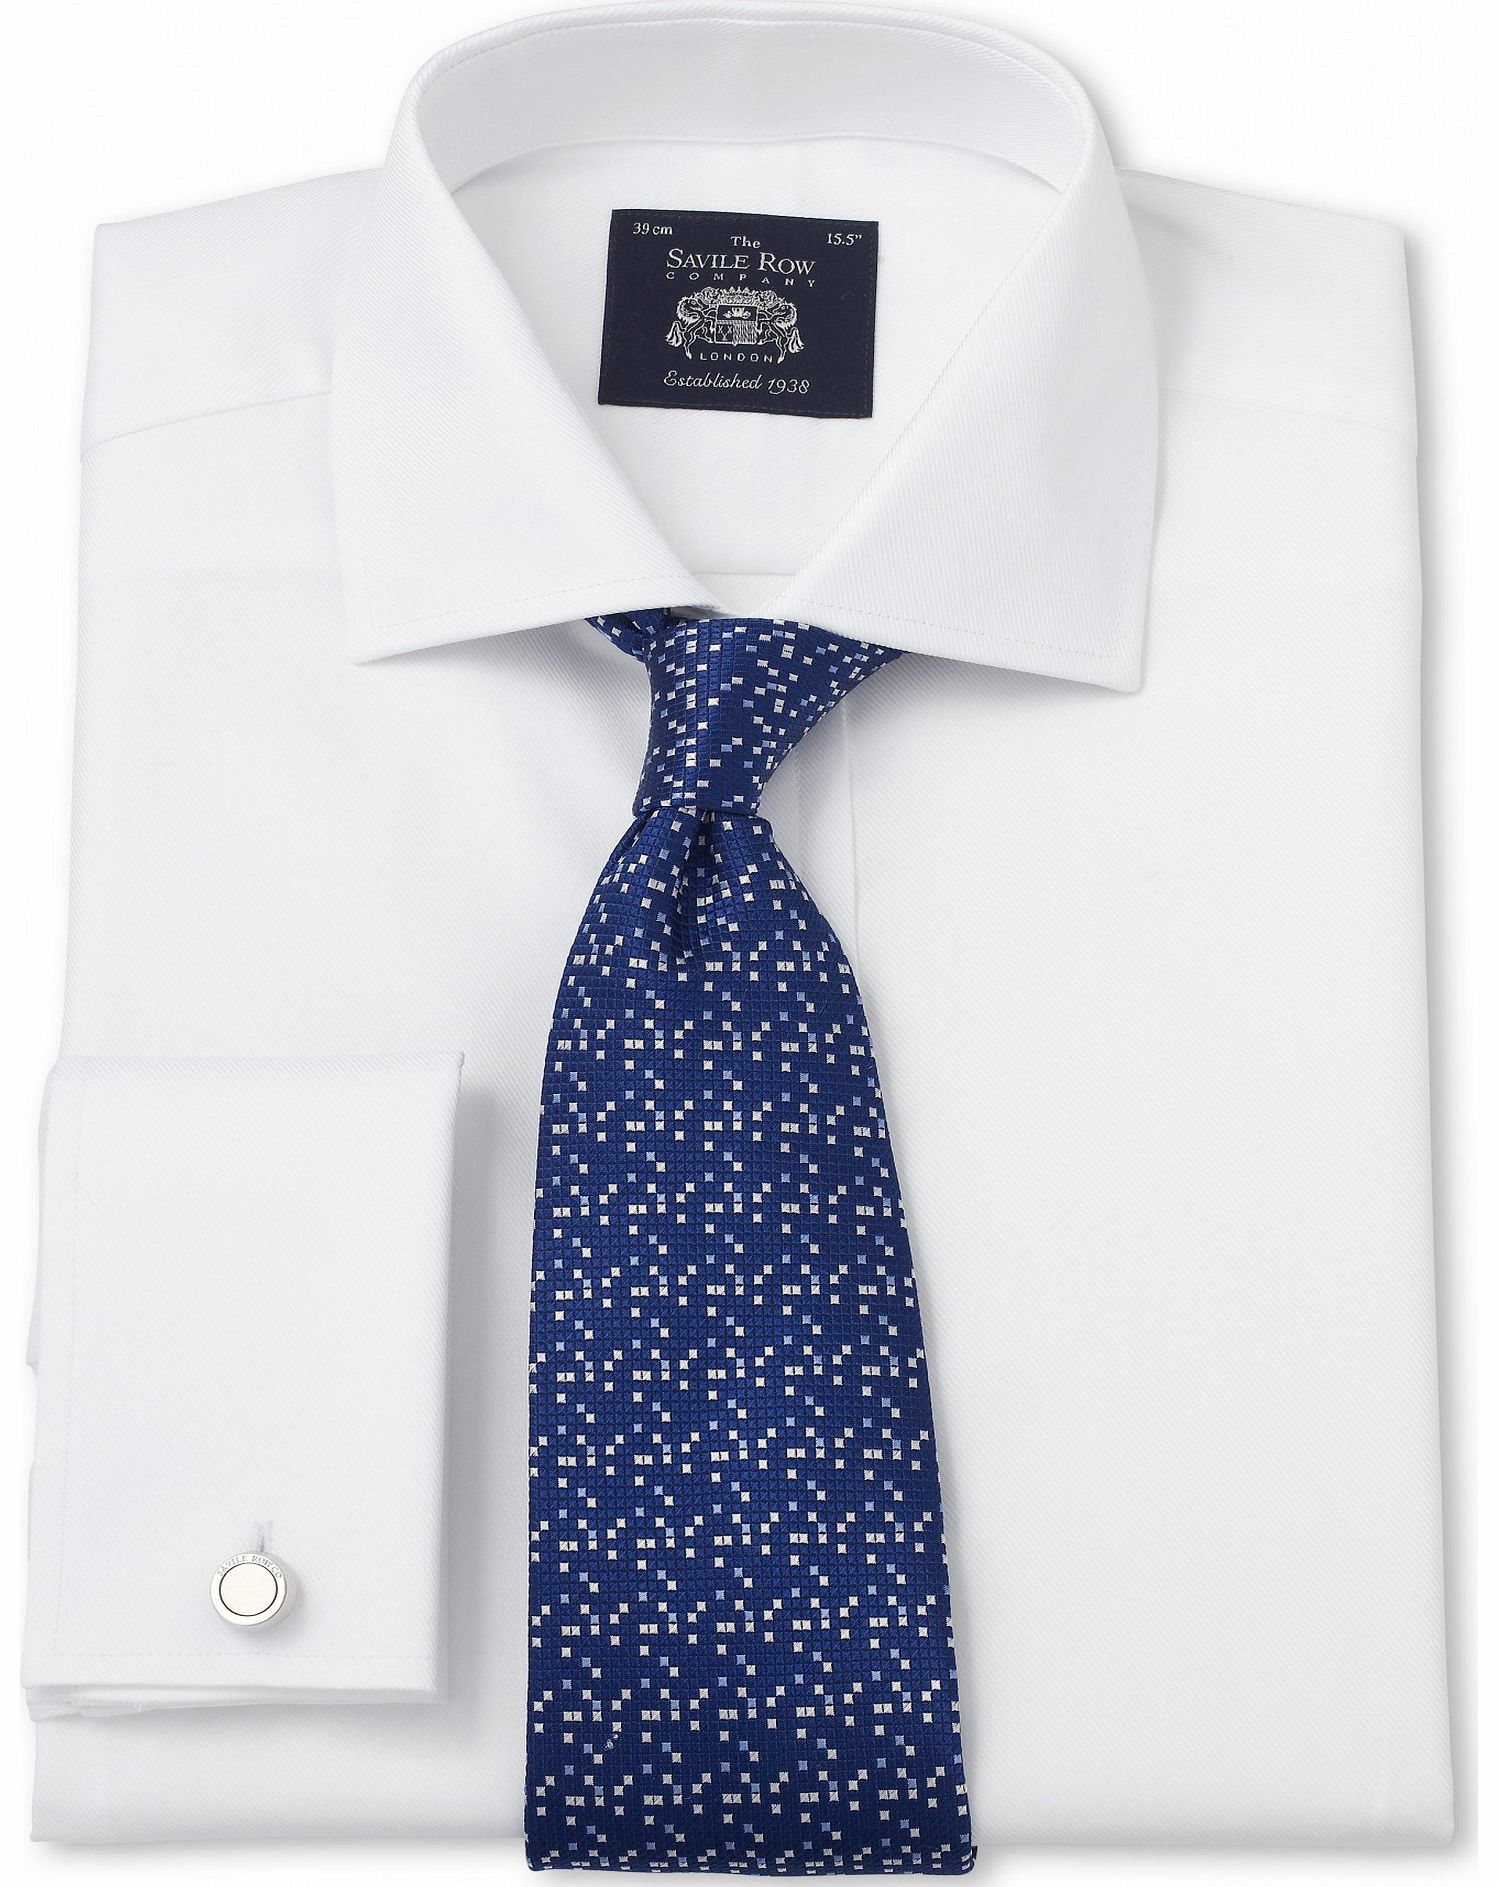 Savile Row Company White Twill Slim Fit Shirt 17`` Lengthened Single